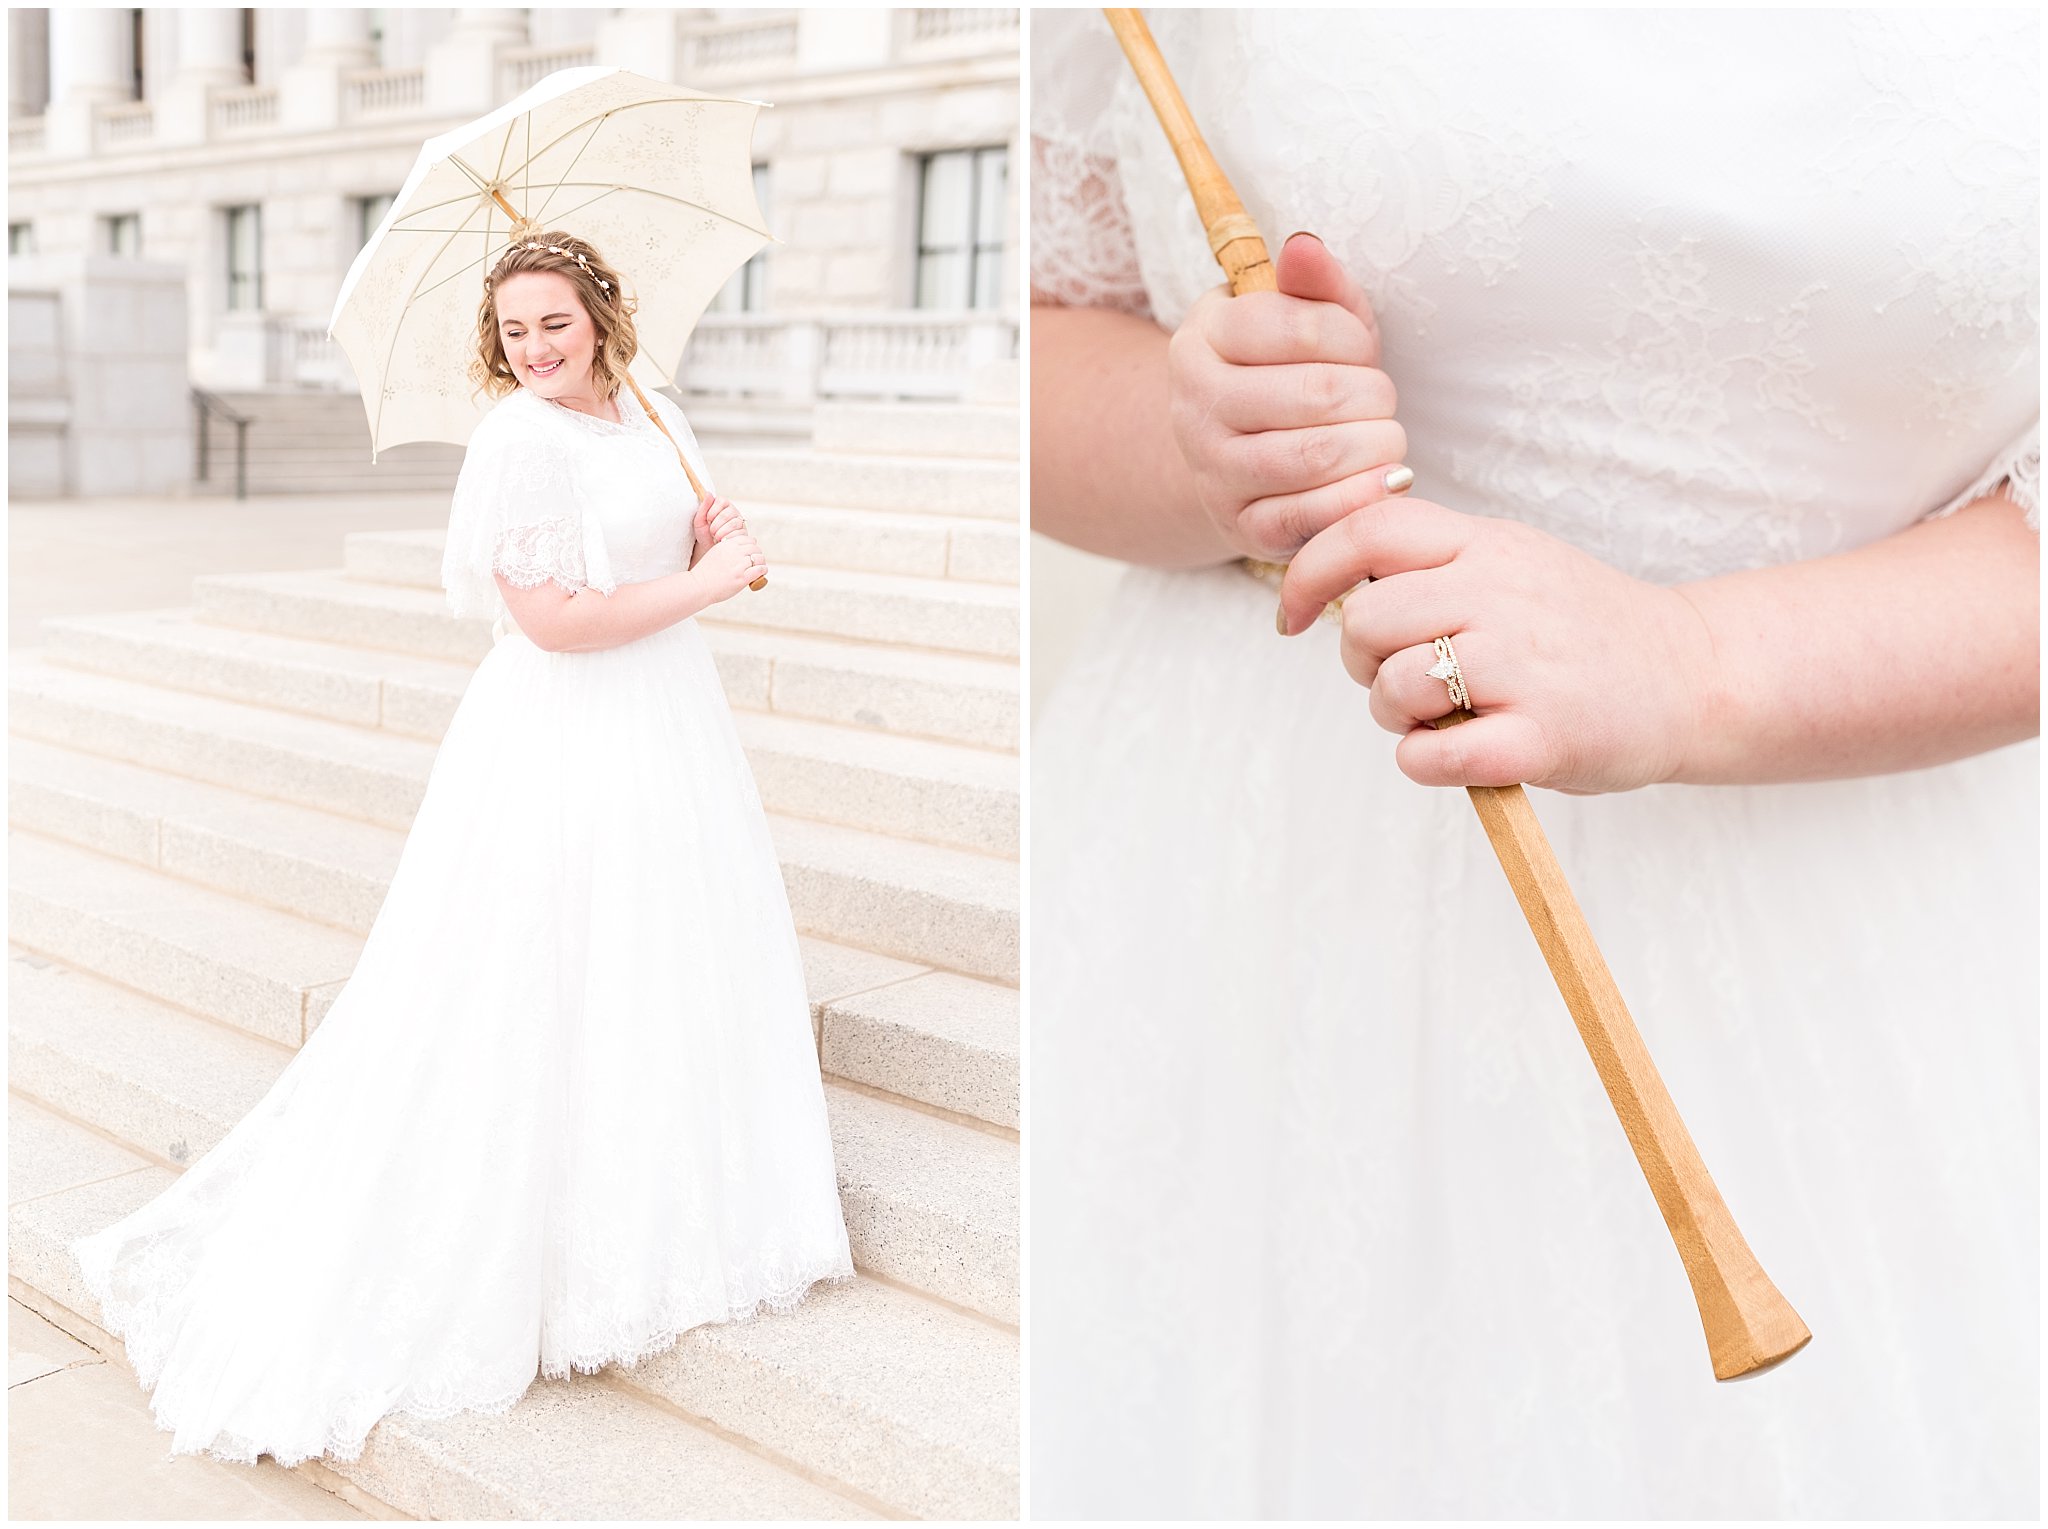 Utah State Capitol Building | Salt Lake City Utah wedding | Bridal portrait | Jessie and Dallin Photography